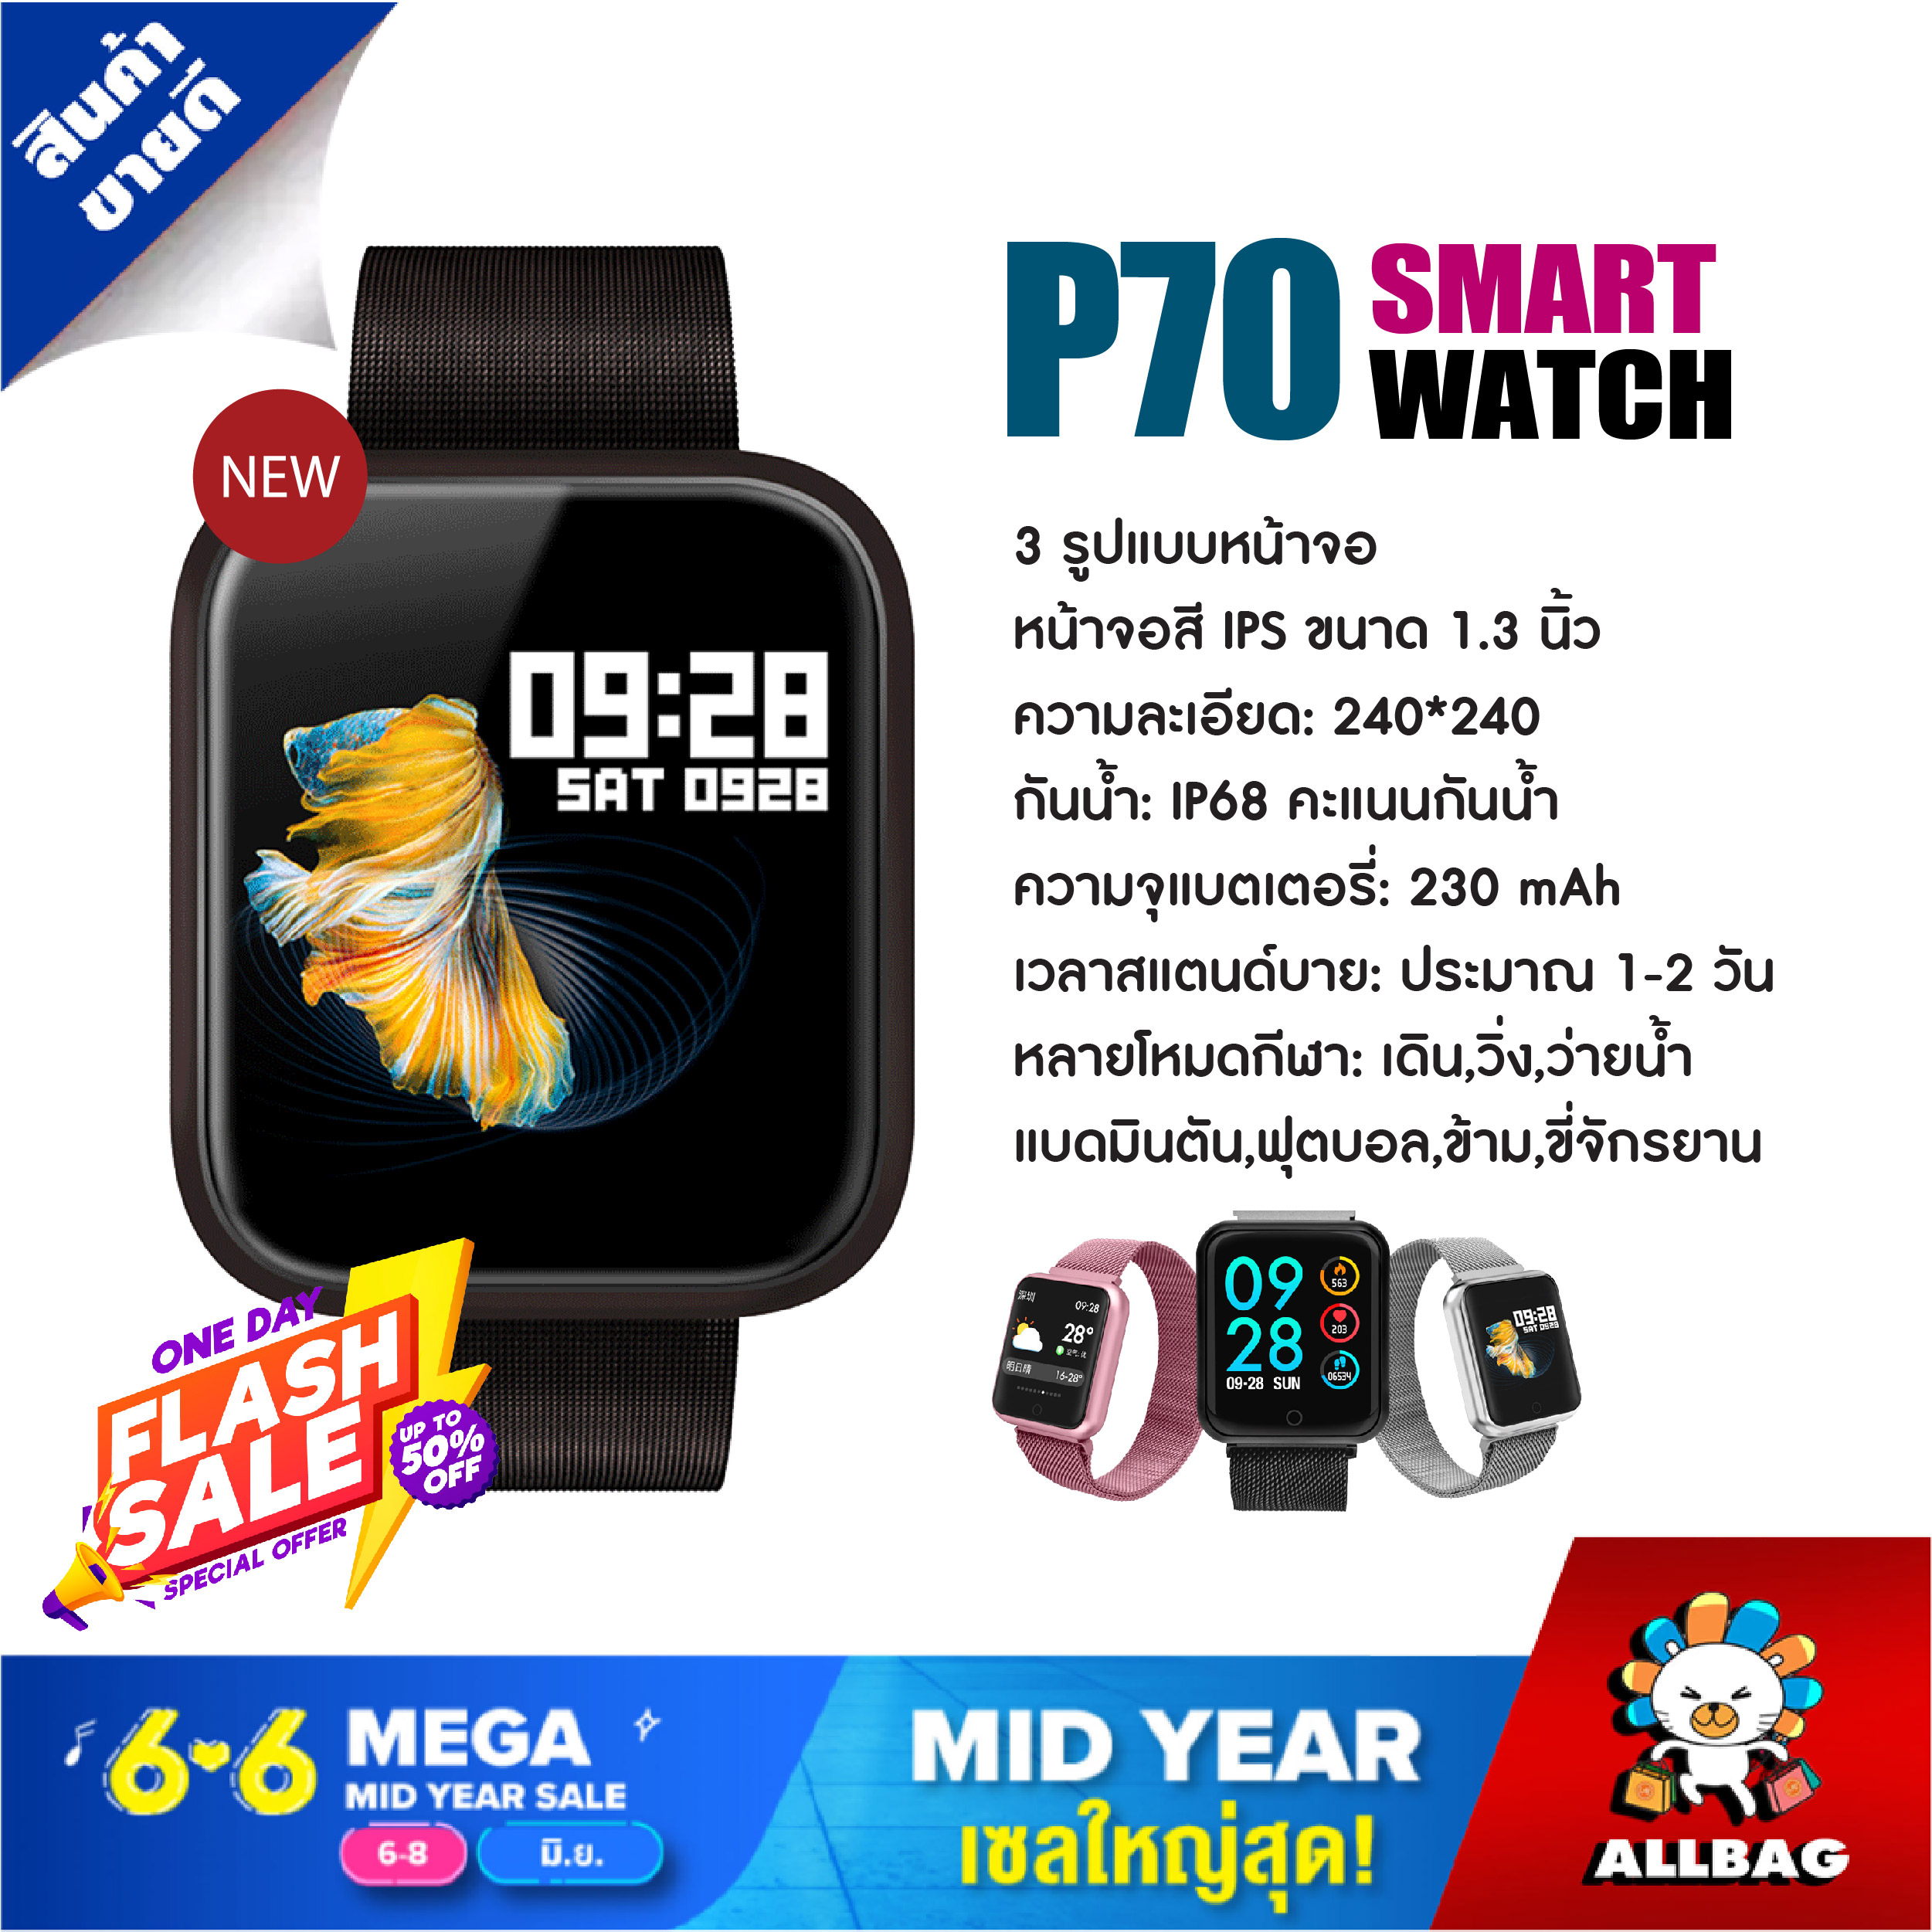 Allbag นาฬิกาอัจฉริยะ สมาร์ทวอทช์ รองรับภาษาไทย Smart Watch P70Pro สามารถเปลี่ยนภาพหน้าจอได้ นาฬิกา ดิจิตอล ใช้ได้ทั้ง Android และ IOS